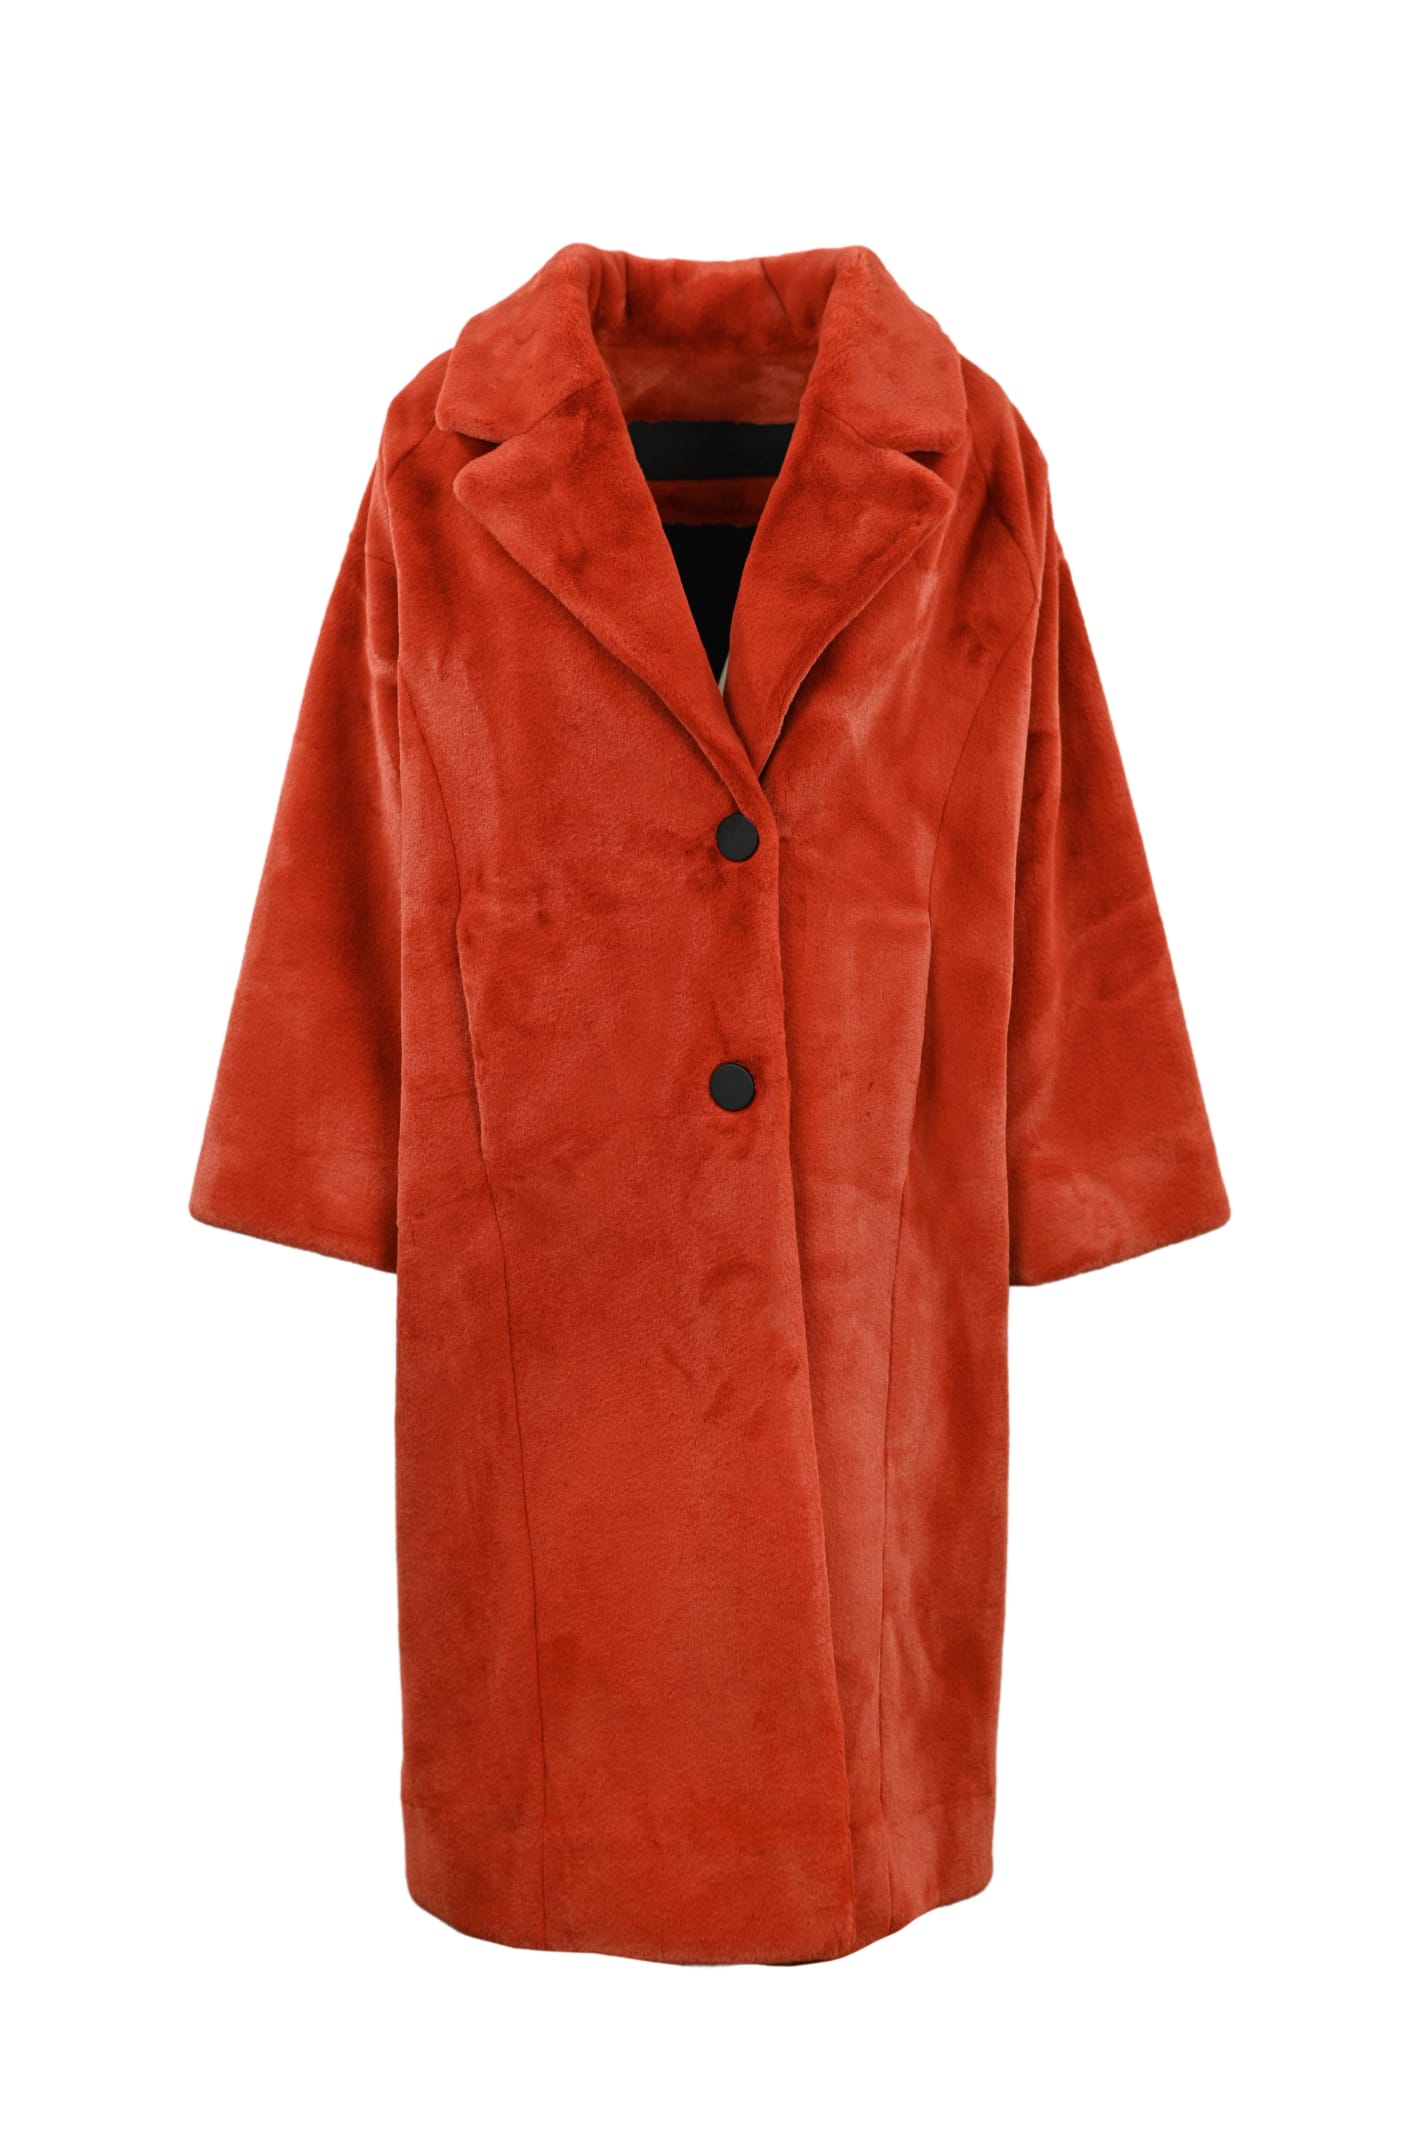 RRD - Roberto Ricci Design Jkt Eco Fur Kimono Coat Lady